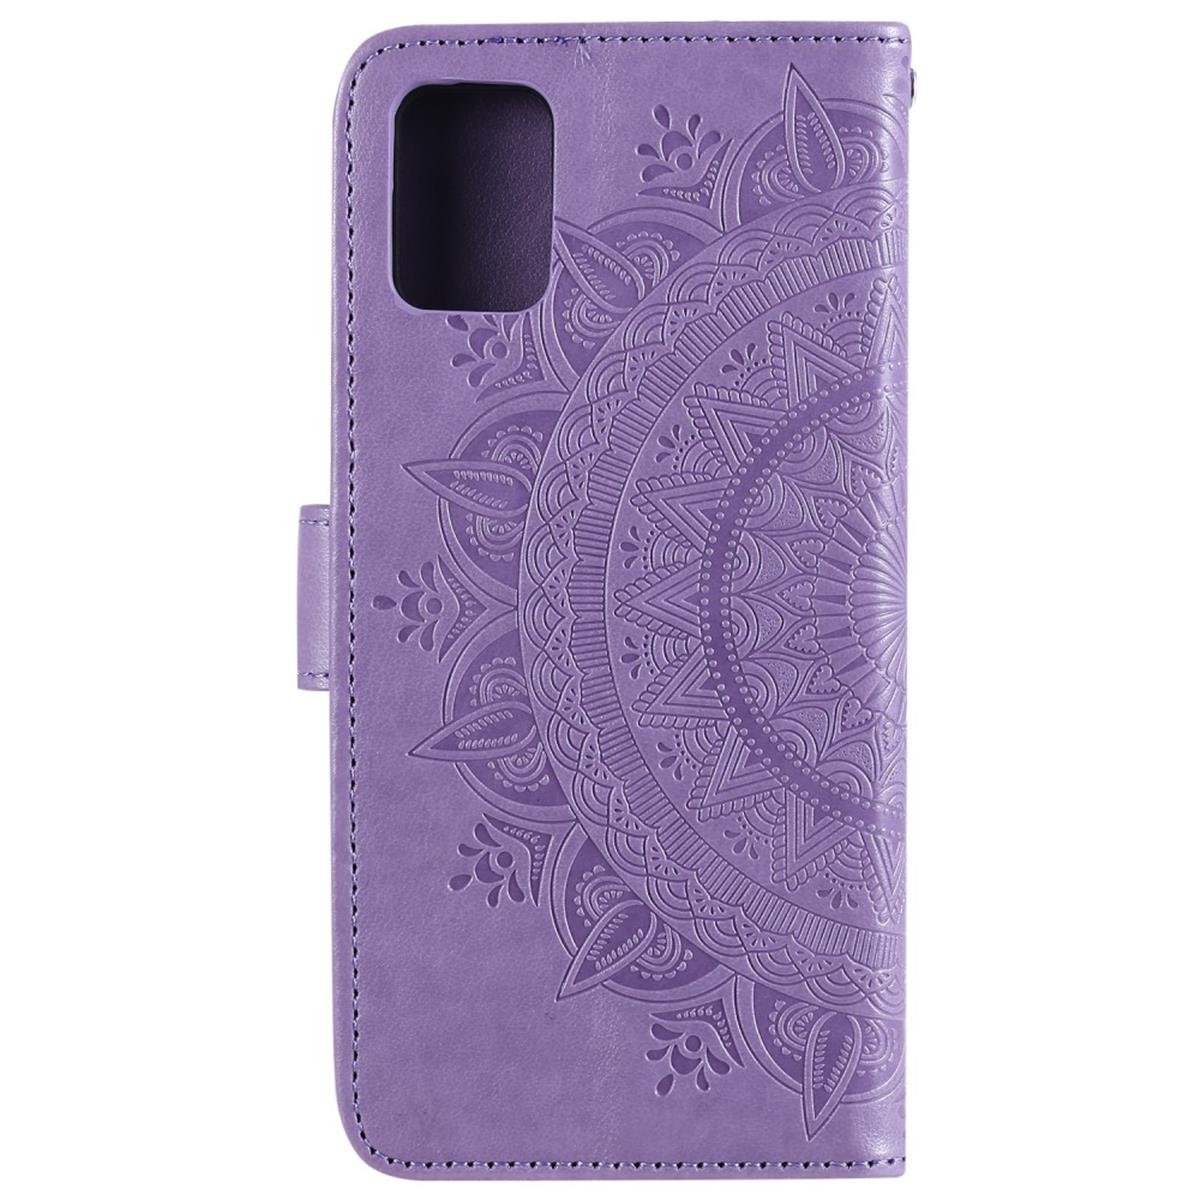 Hülle für Samsung Galaxy A51 Handyhülle Flip Case Schutzhülle Cover Mandala Lila